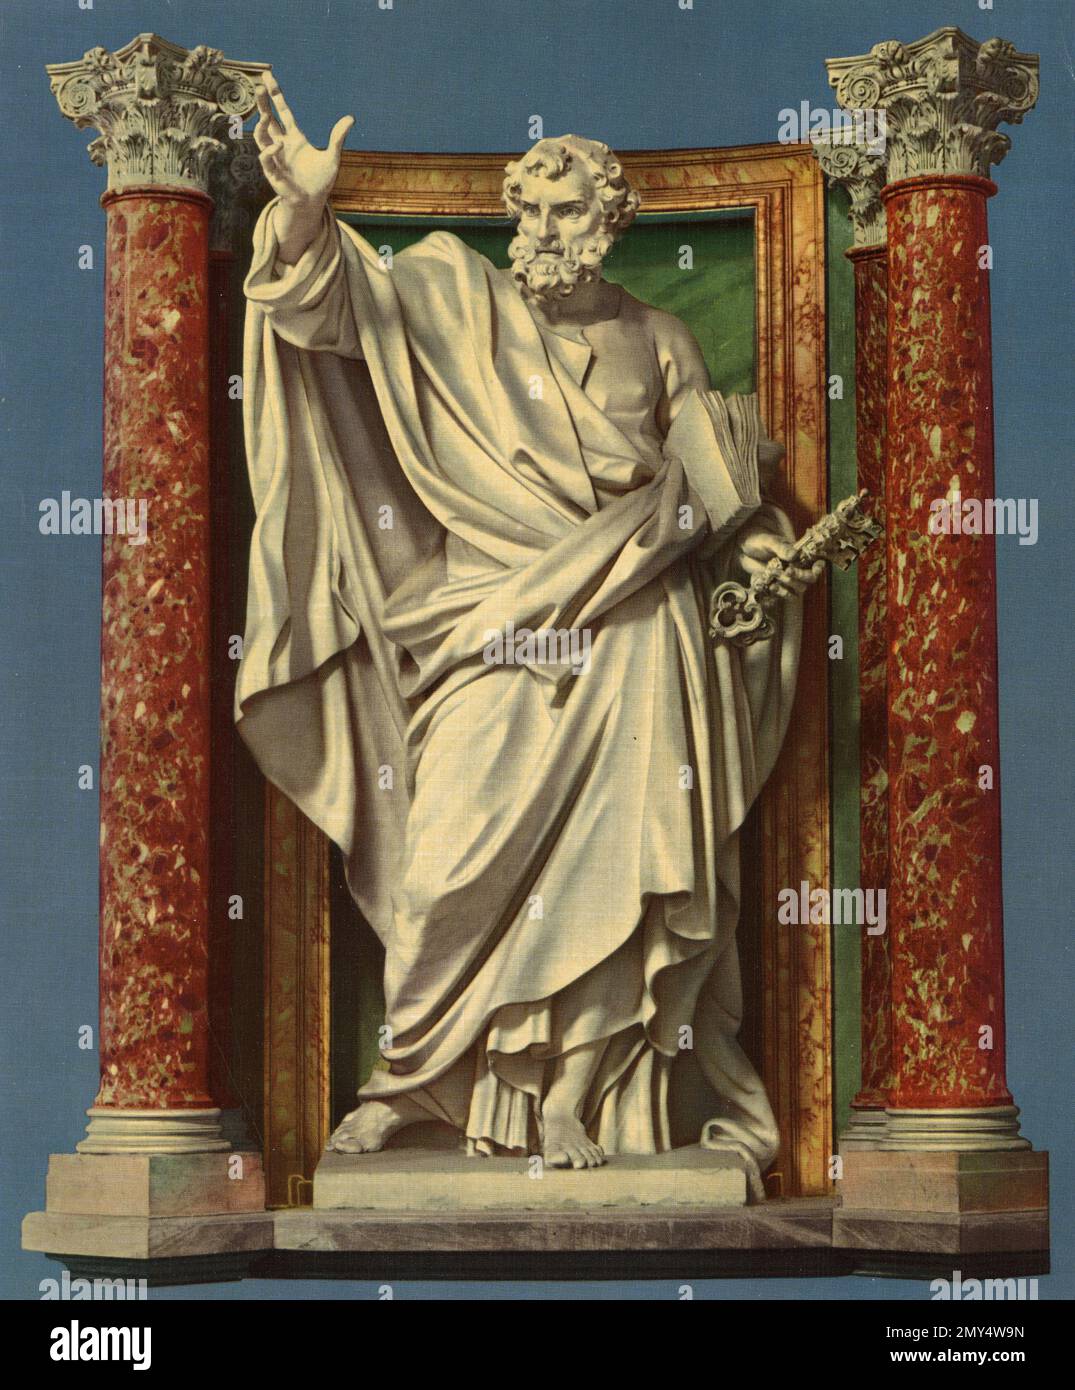 Statue of St. Peter Apostle at St. John Laterano Basilica, Rome, Italy 1940s Stock Photo